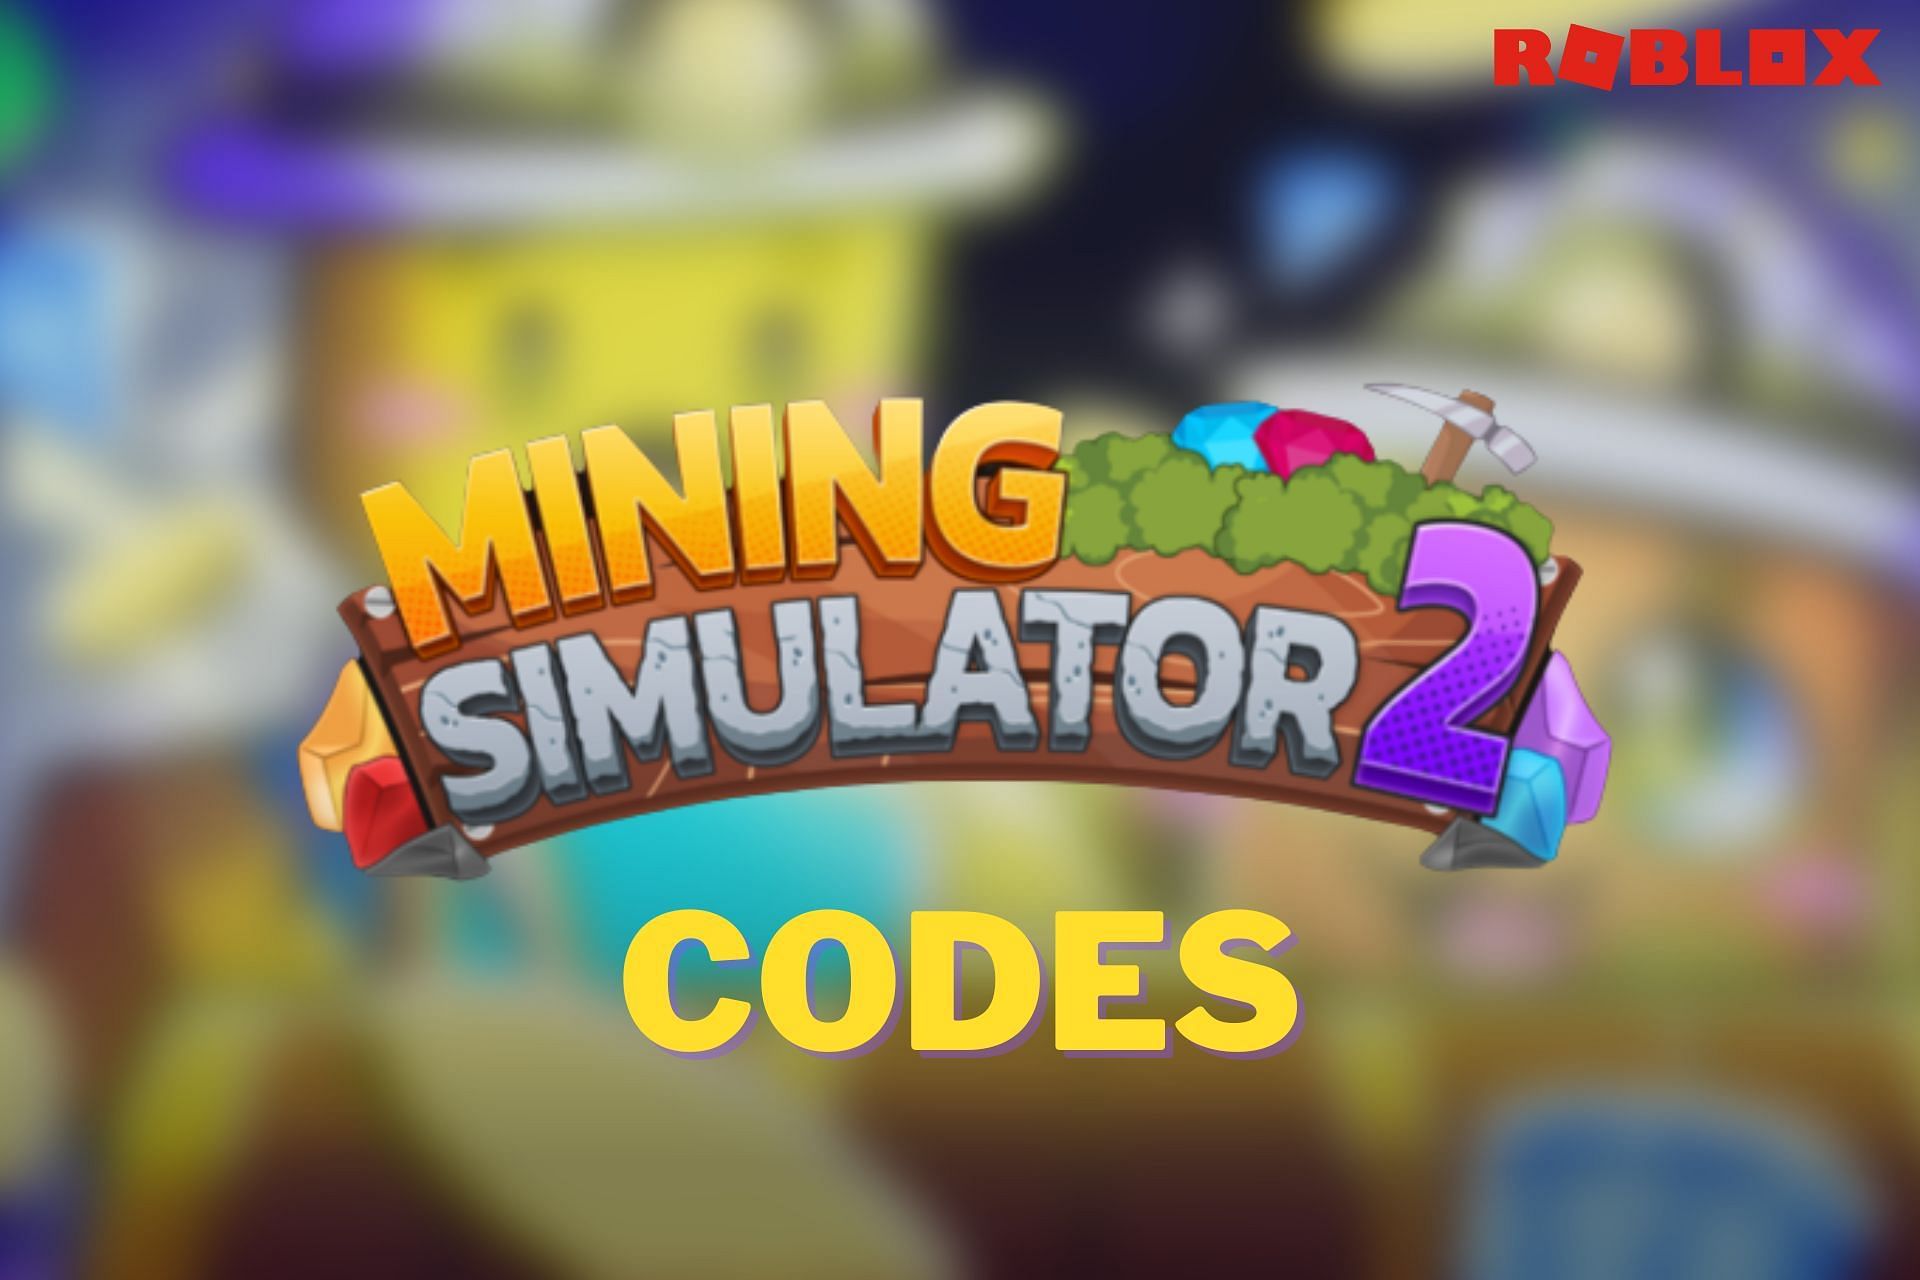 mining-simulator-codes-pt-2-roblox-youtube